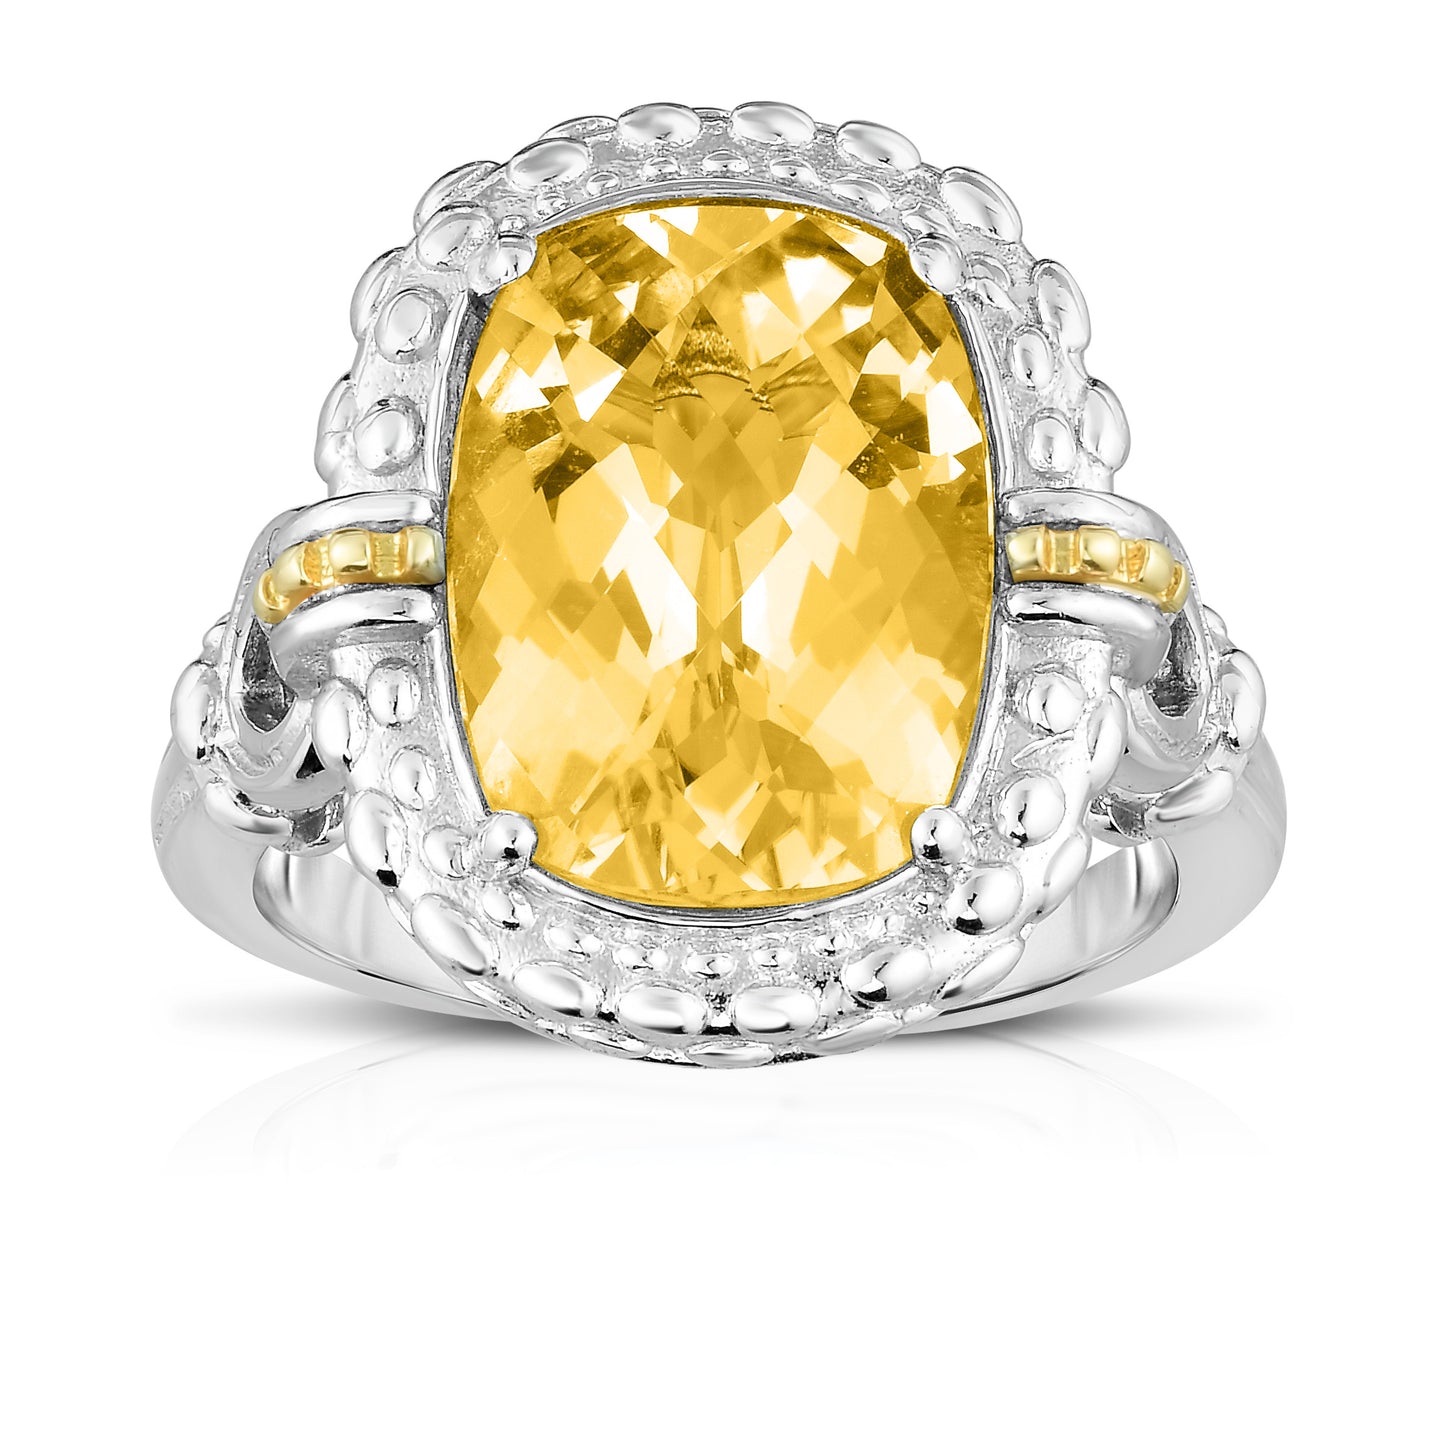 Sterling Silver & 18K Gold Gemstone Cocktail Ring